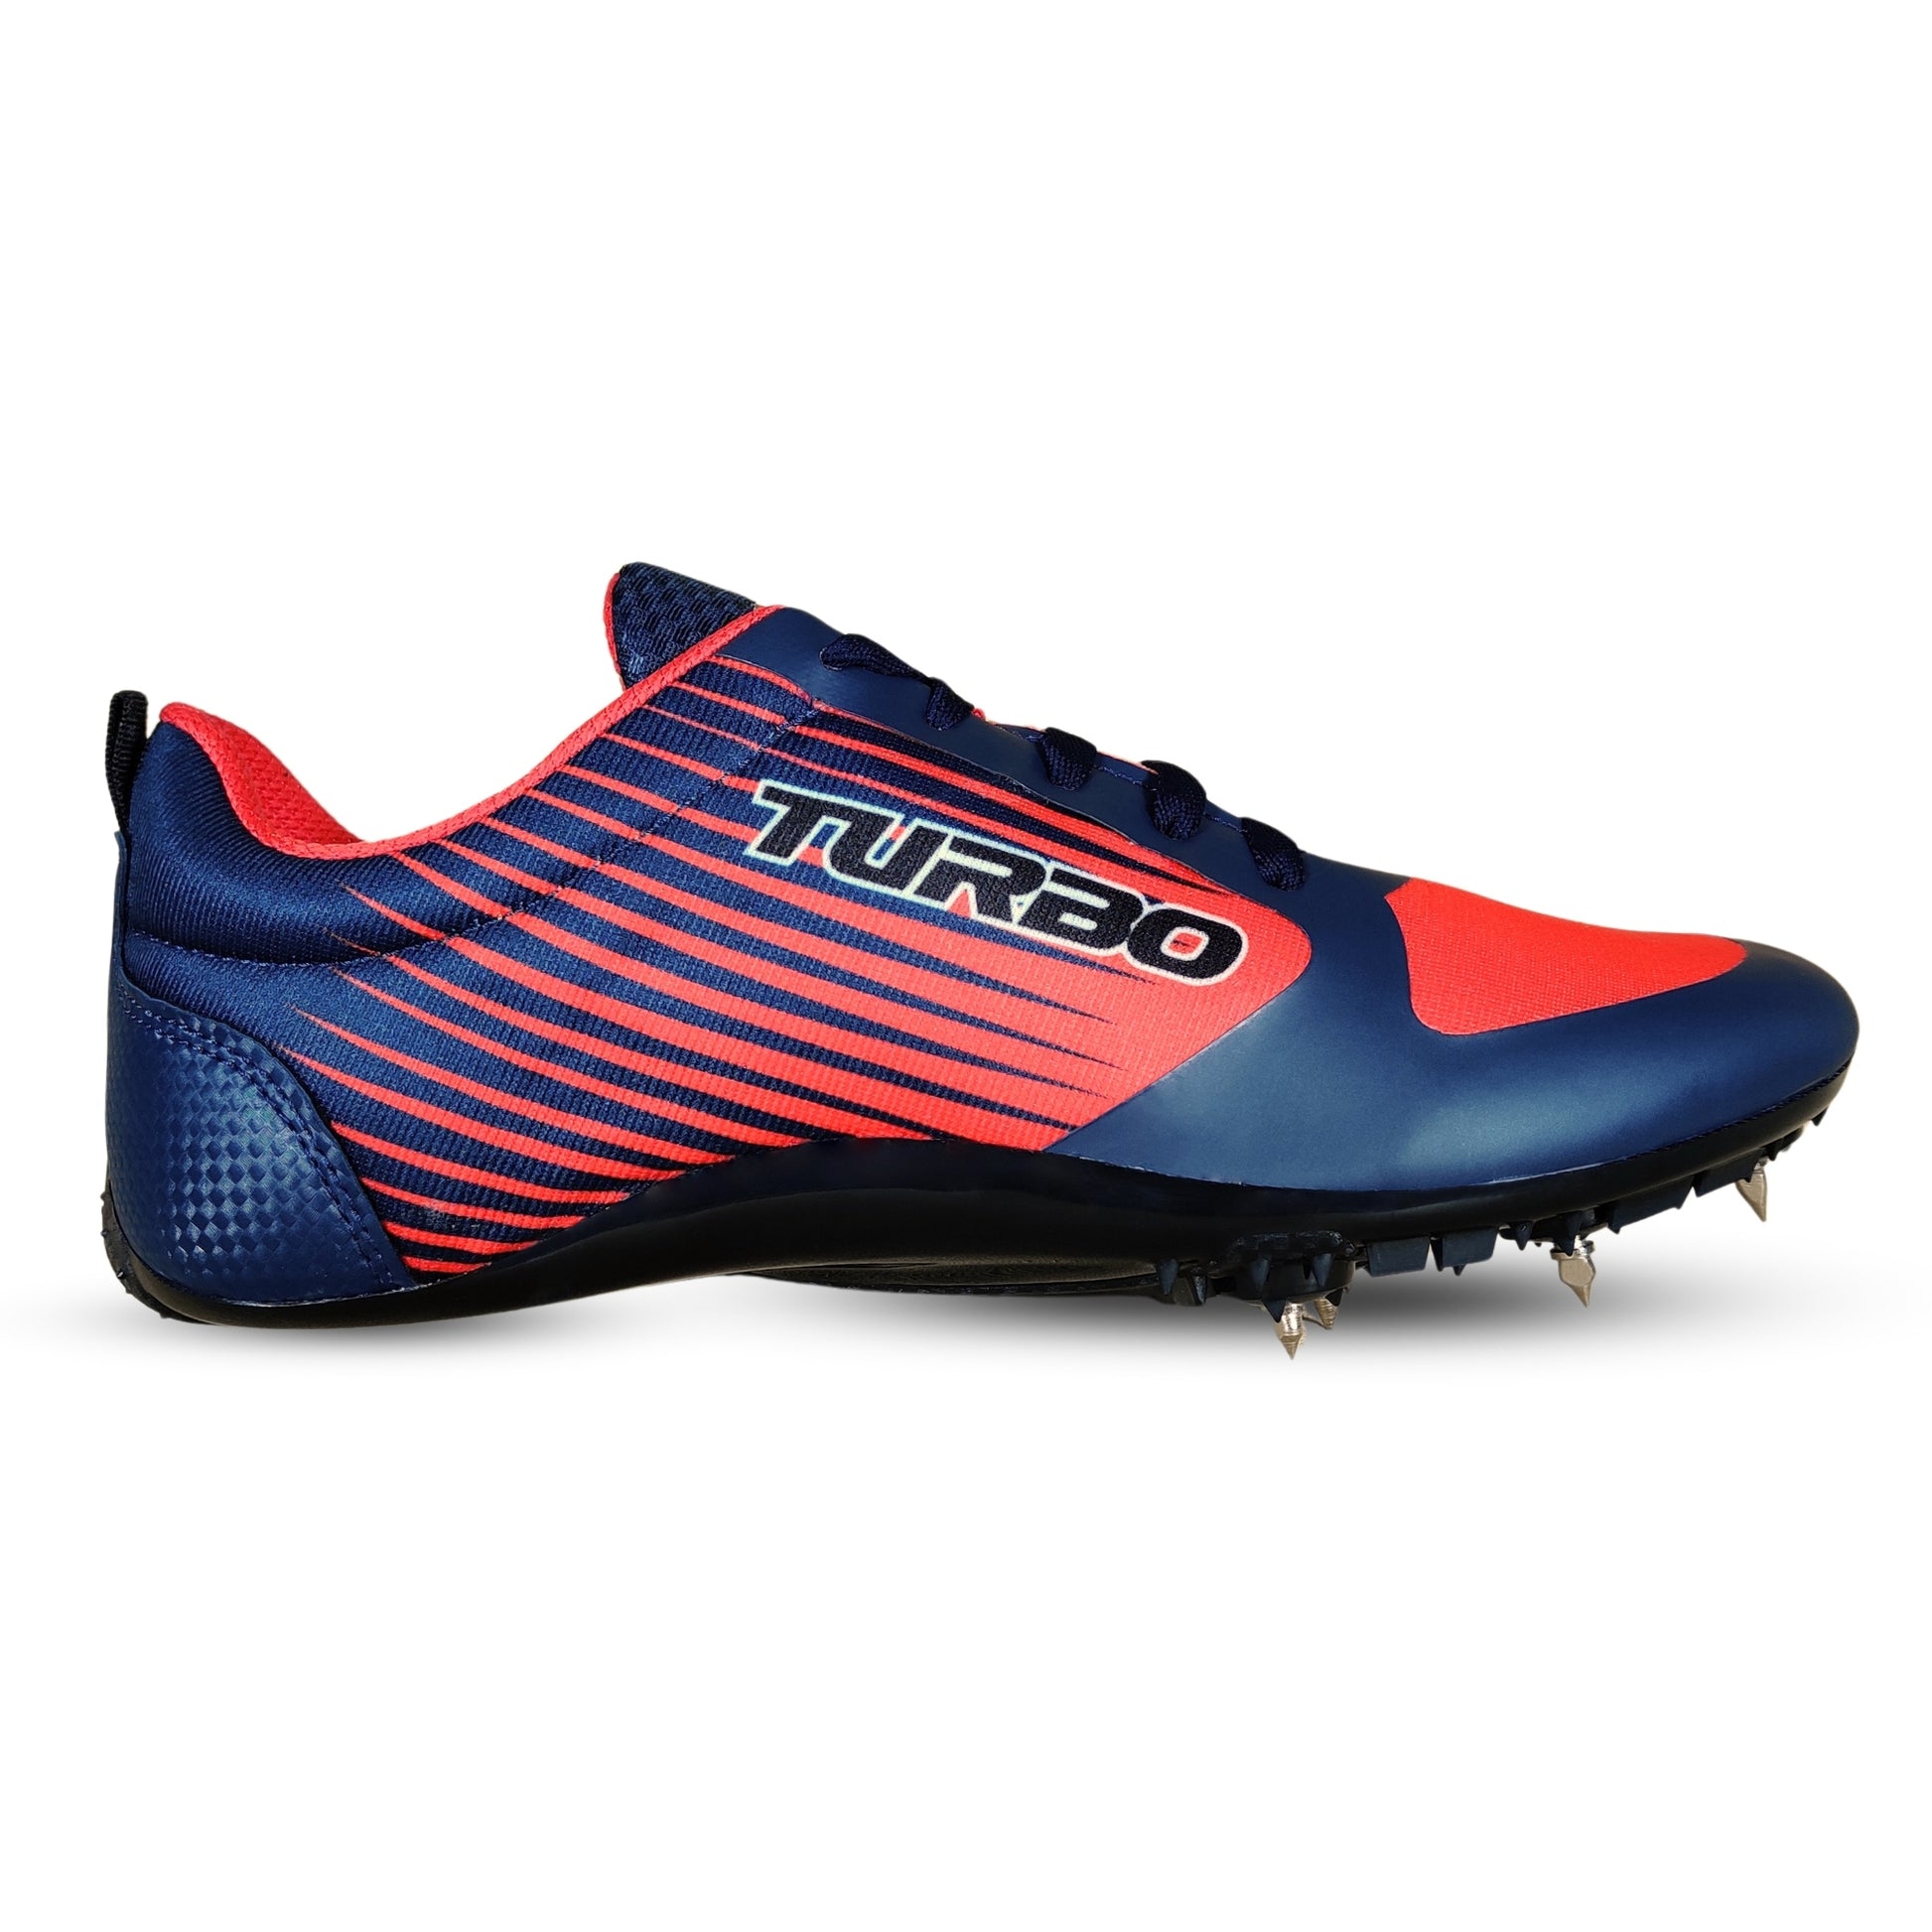 Prokick Turbo Running Spike Shoes - Best Price online Prokicksports.com